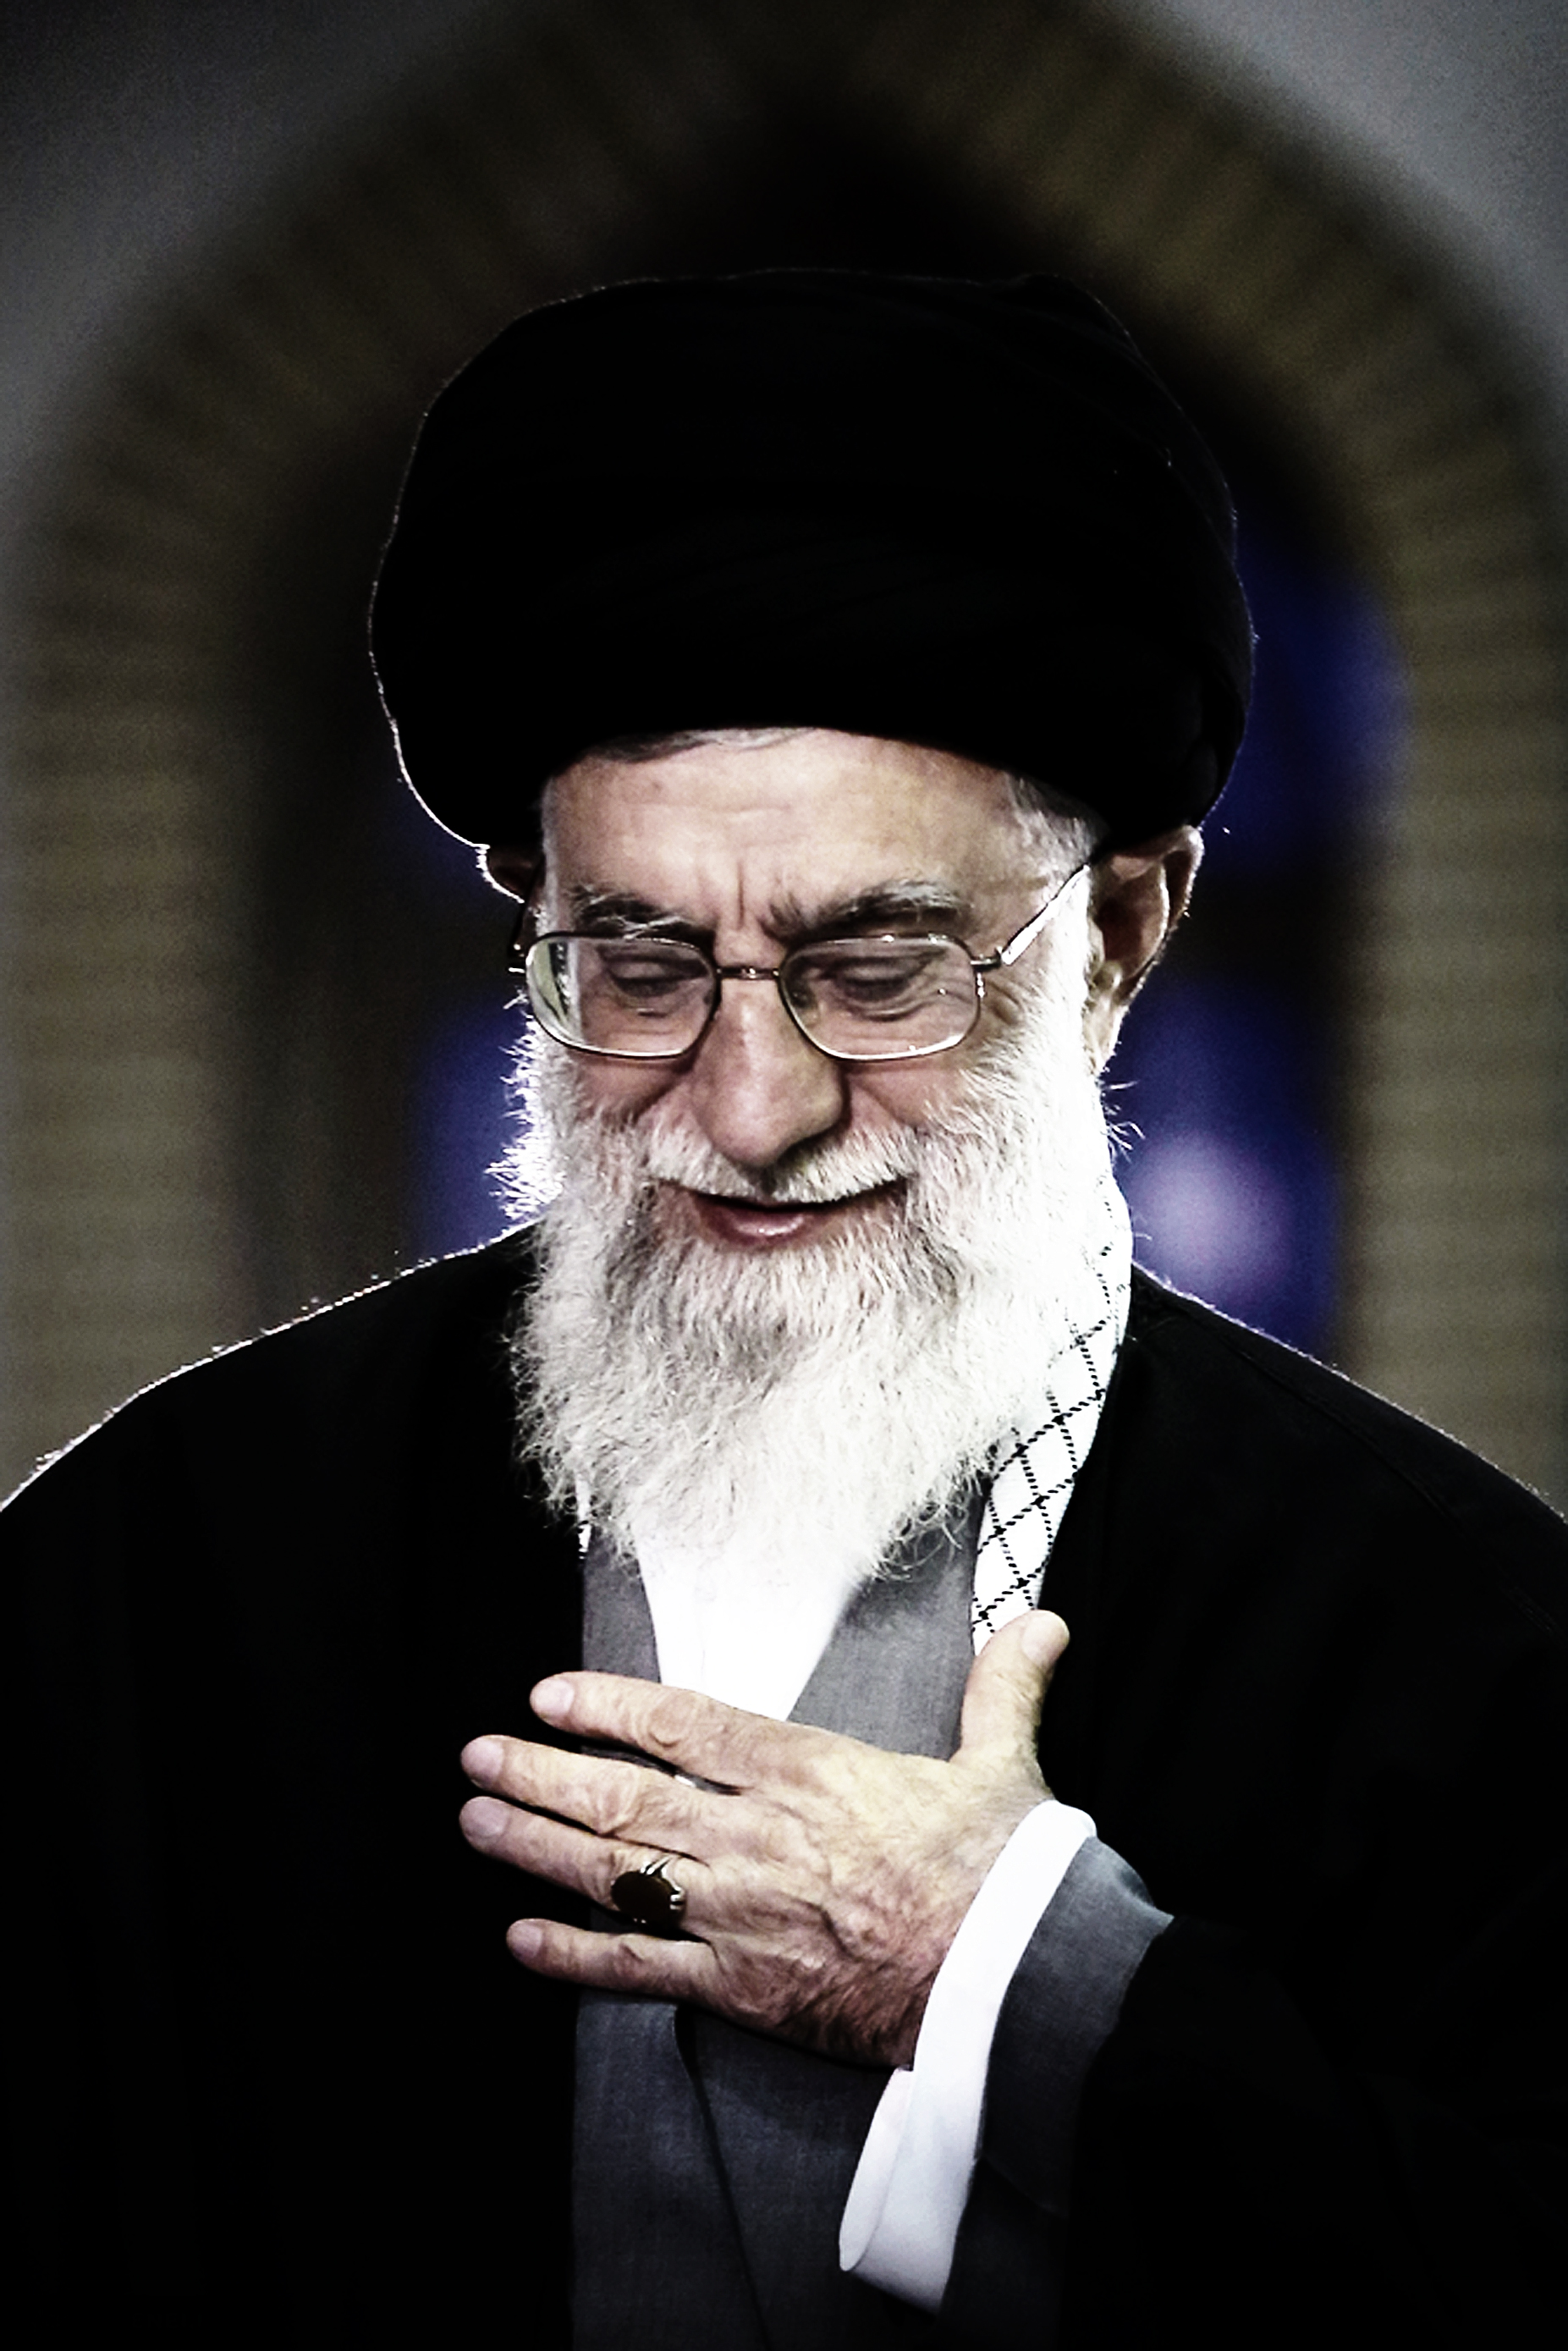 imam_khamenei_by_karentolo-d5mos7j.jpg